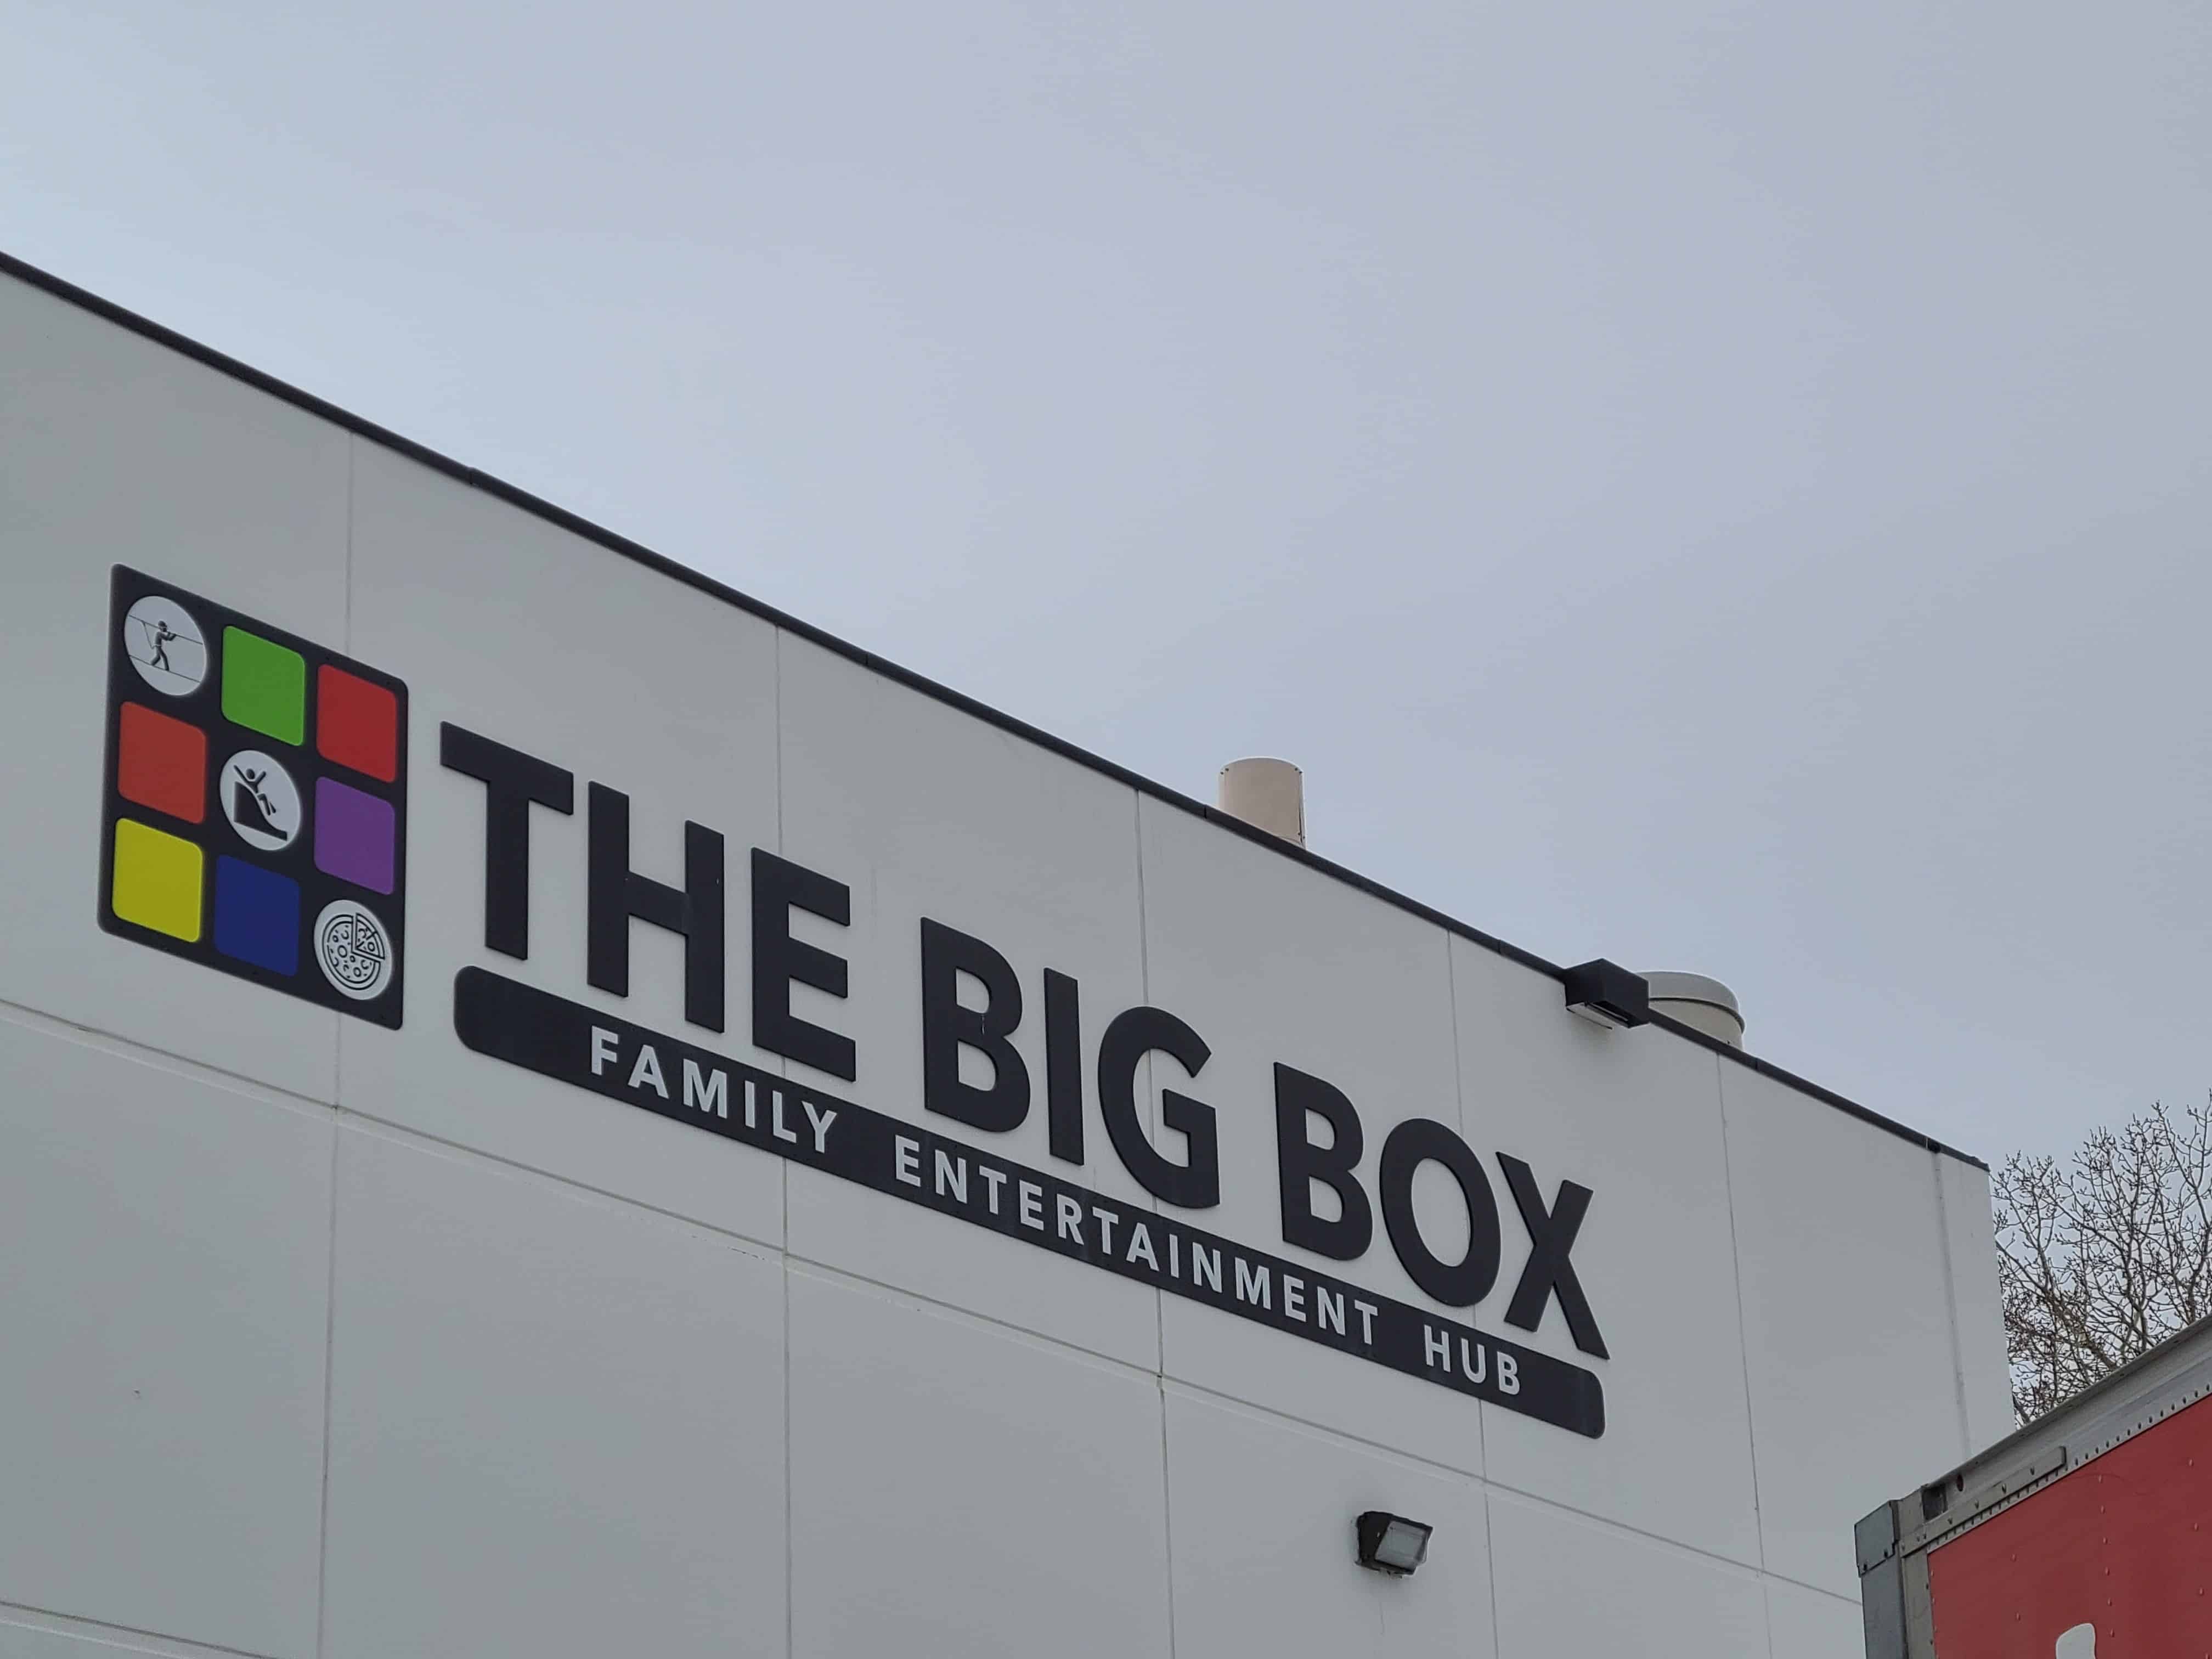 The Big Box Family Entertainment Hub